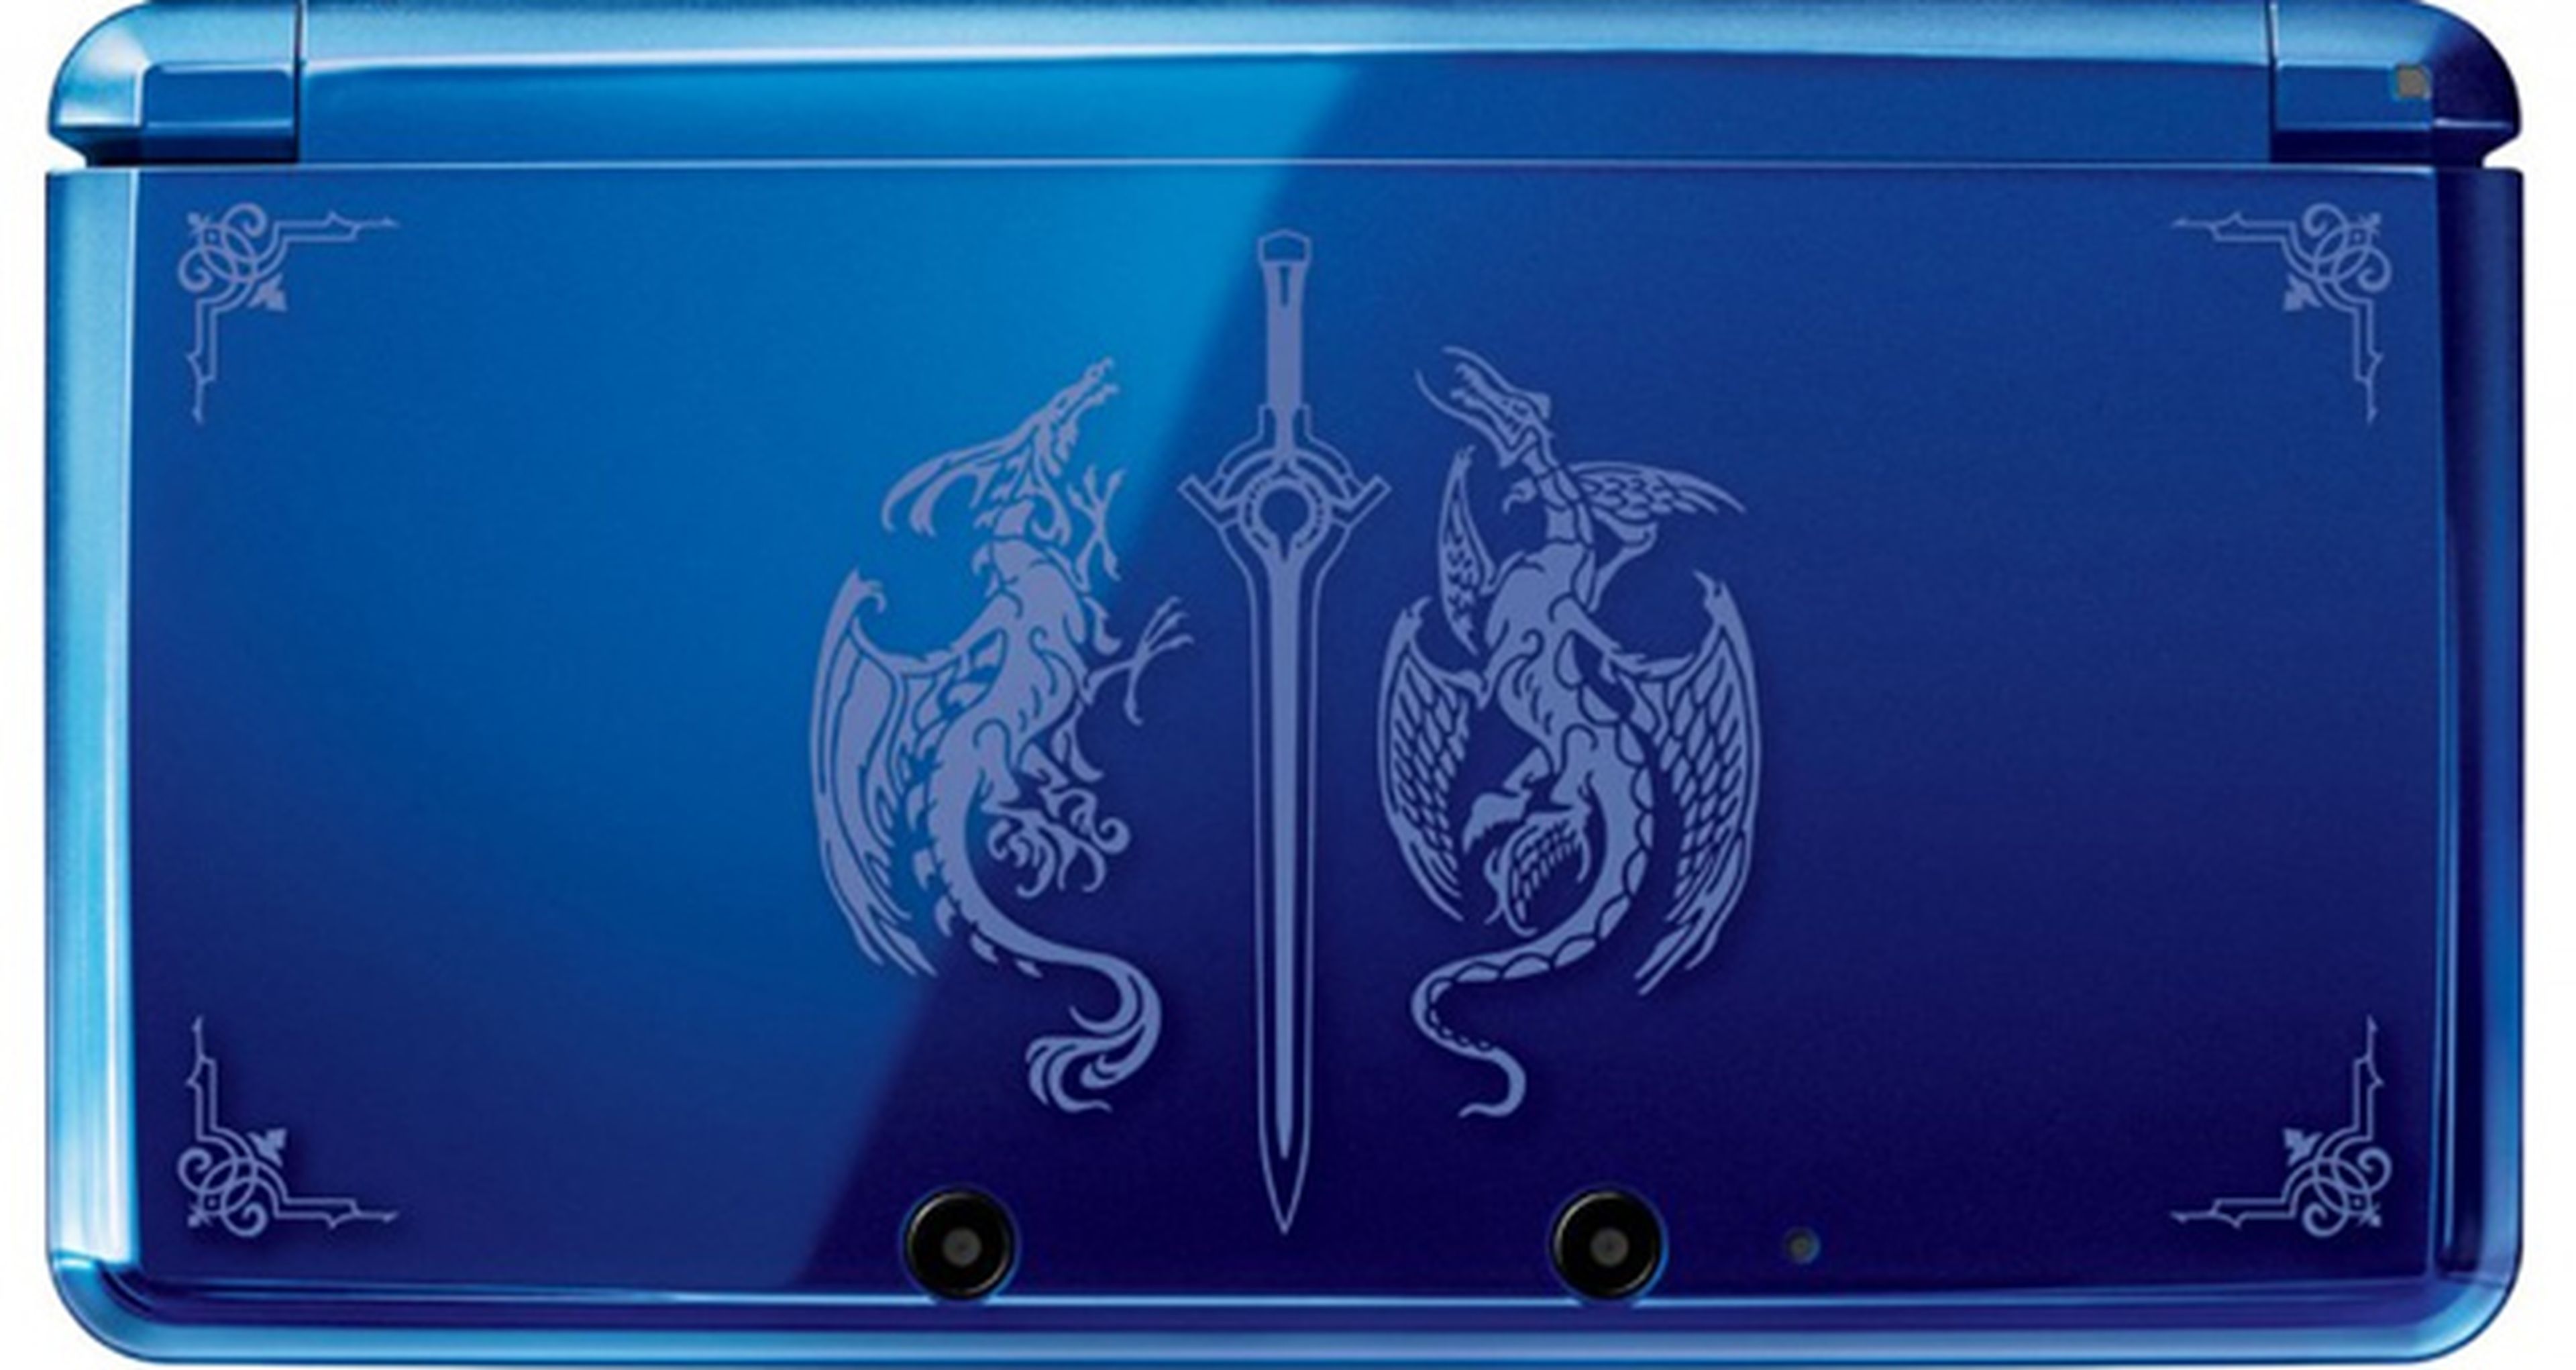 Nintendo fire. Nintendo 3ds Cobalt Blue. Nintendo 3ds. Fire Emblem 3ds. Nintendo 3ds LX синий.